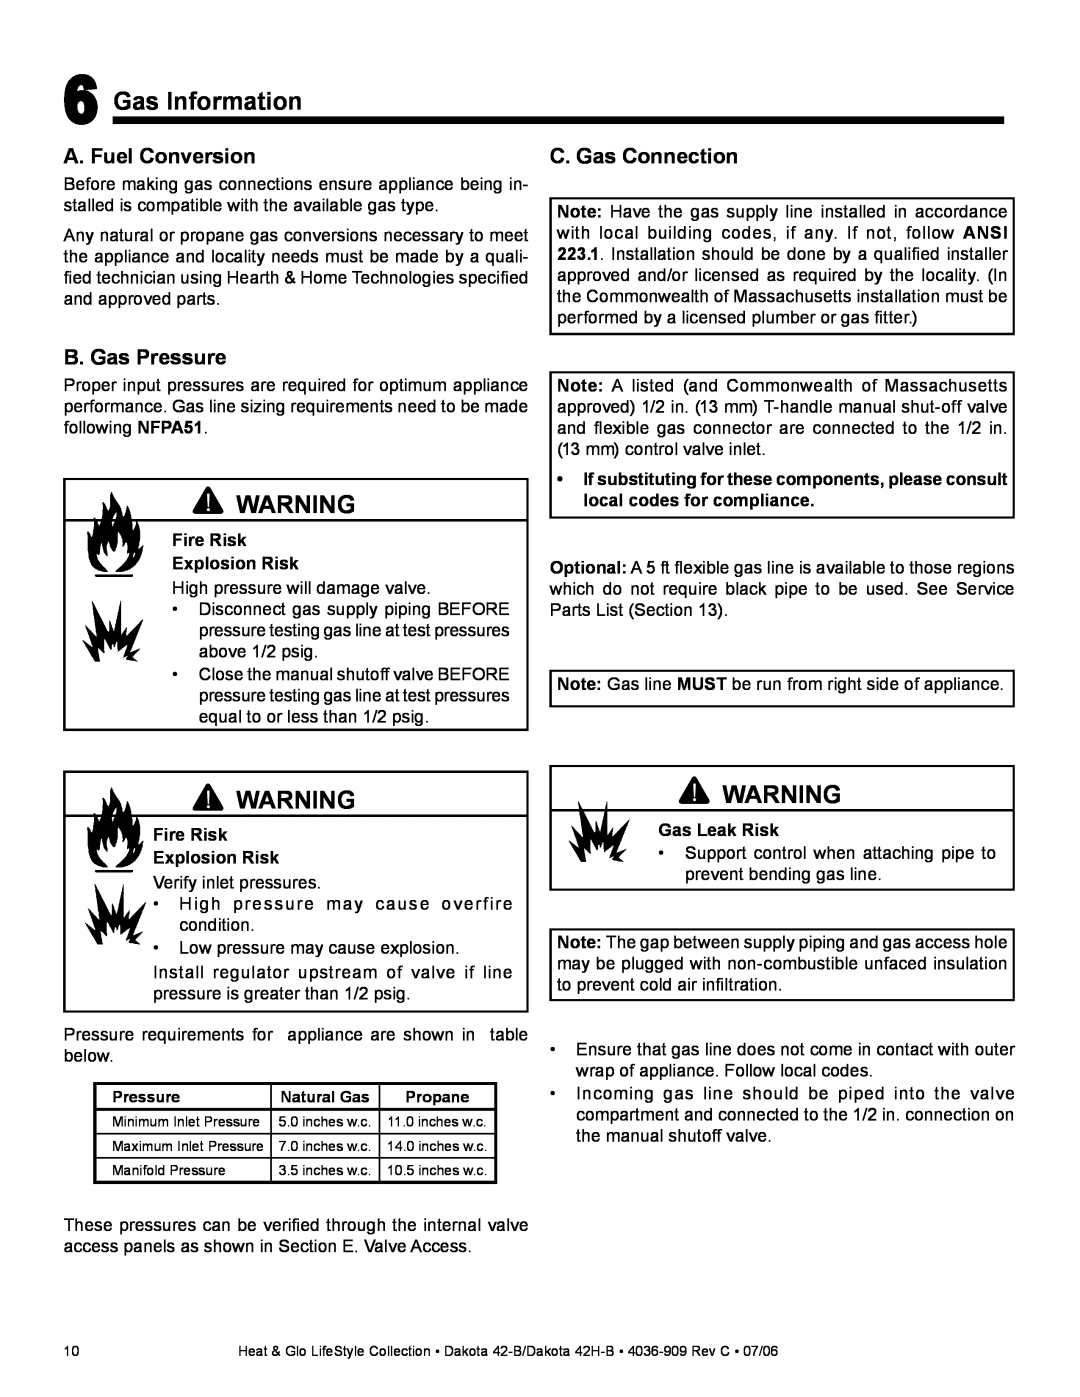 Heat & Glo LifeStyle Dakota 42-B Gas Information, A. Fuel Conversion, C. Gas Connection, B. Gas Pressure, Gas Leak Risk 